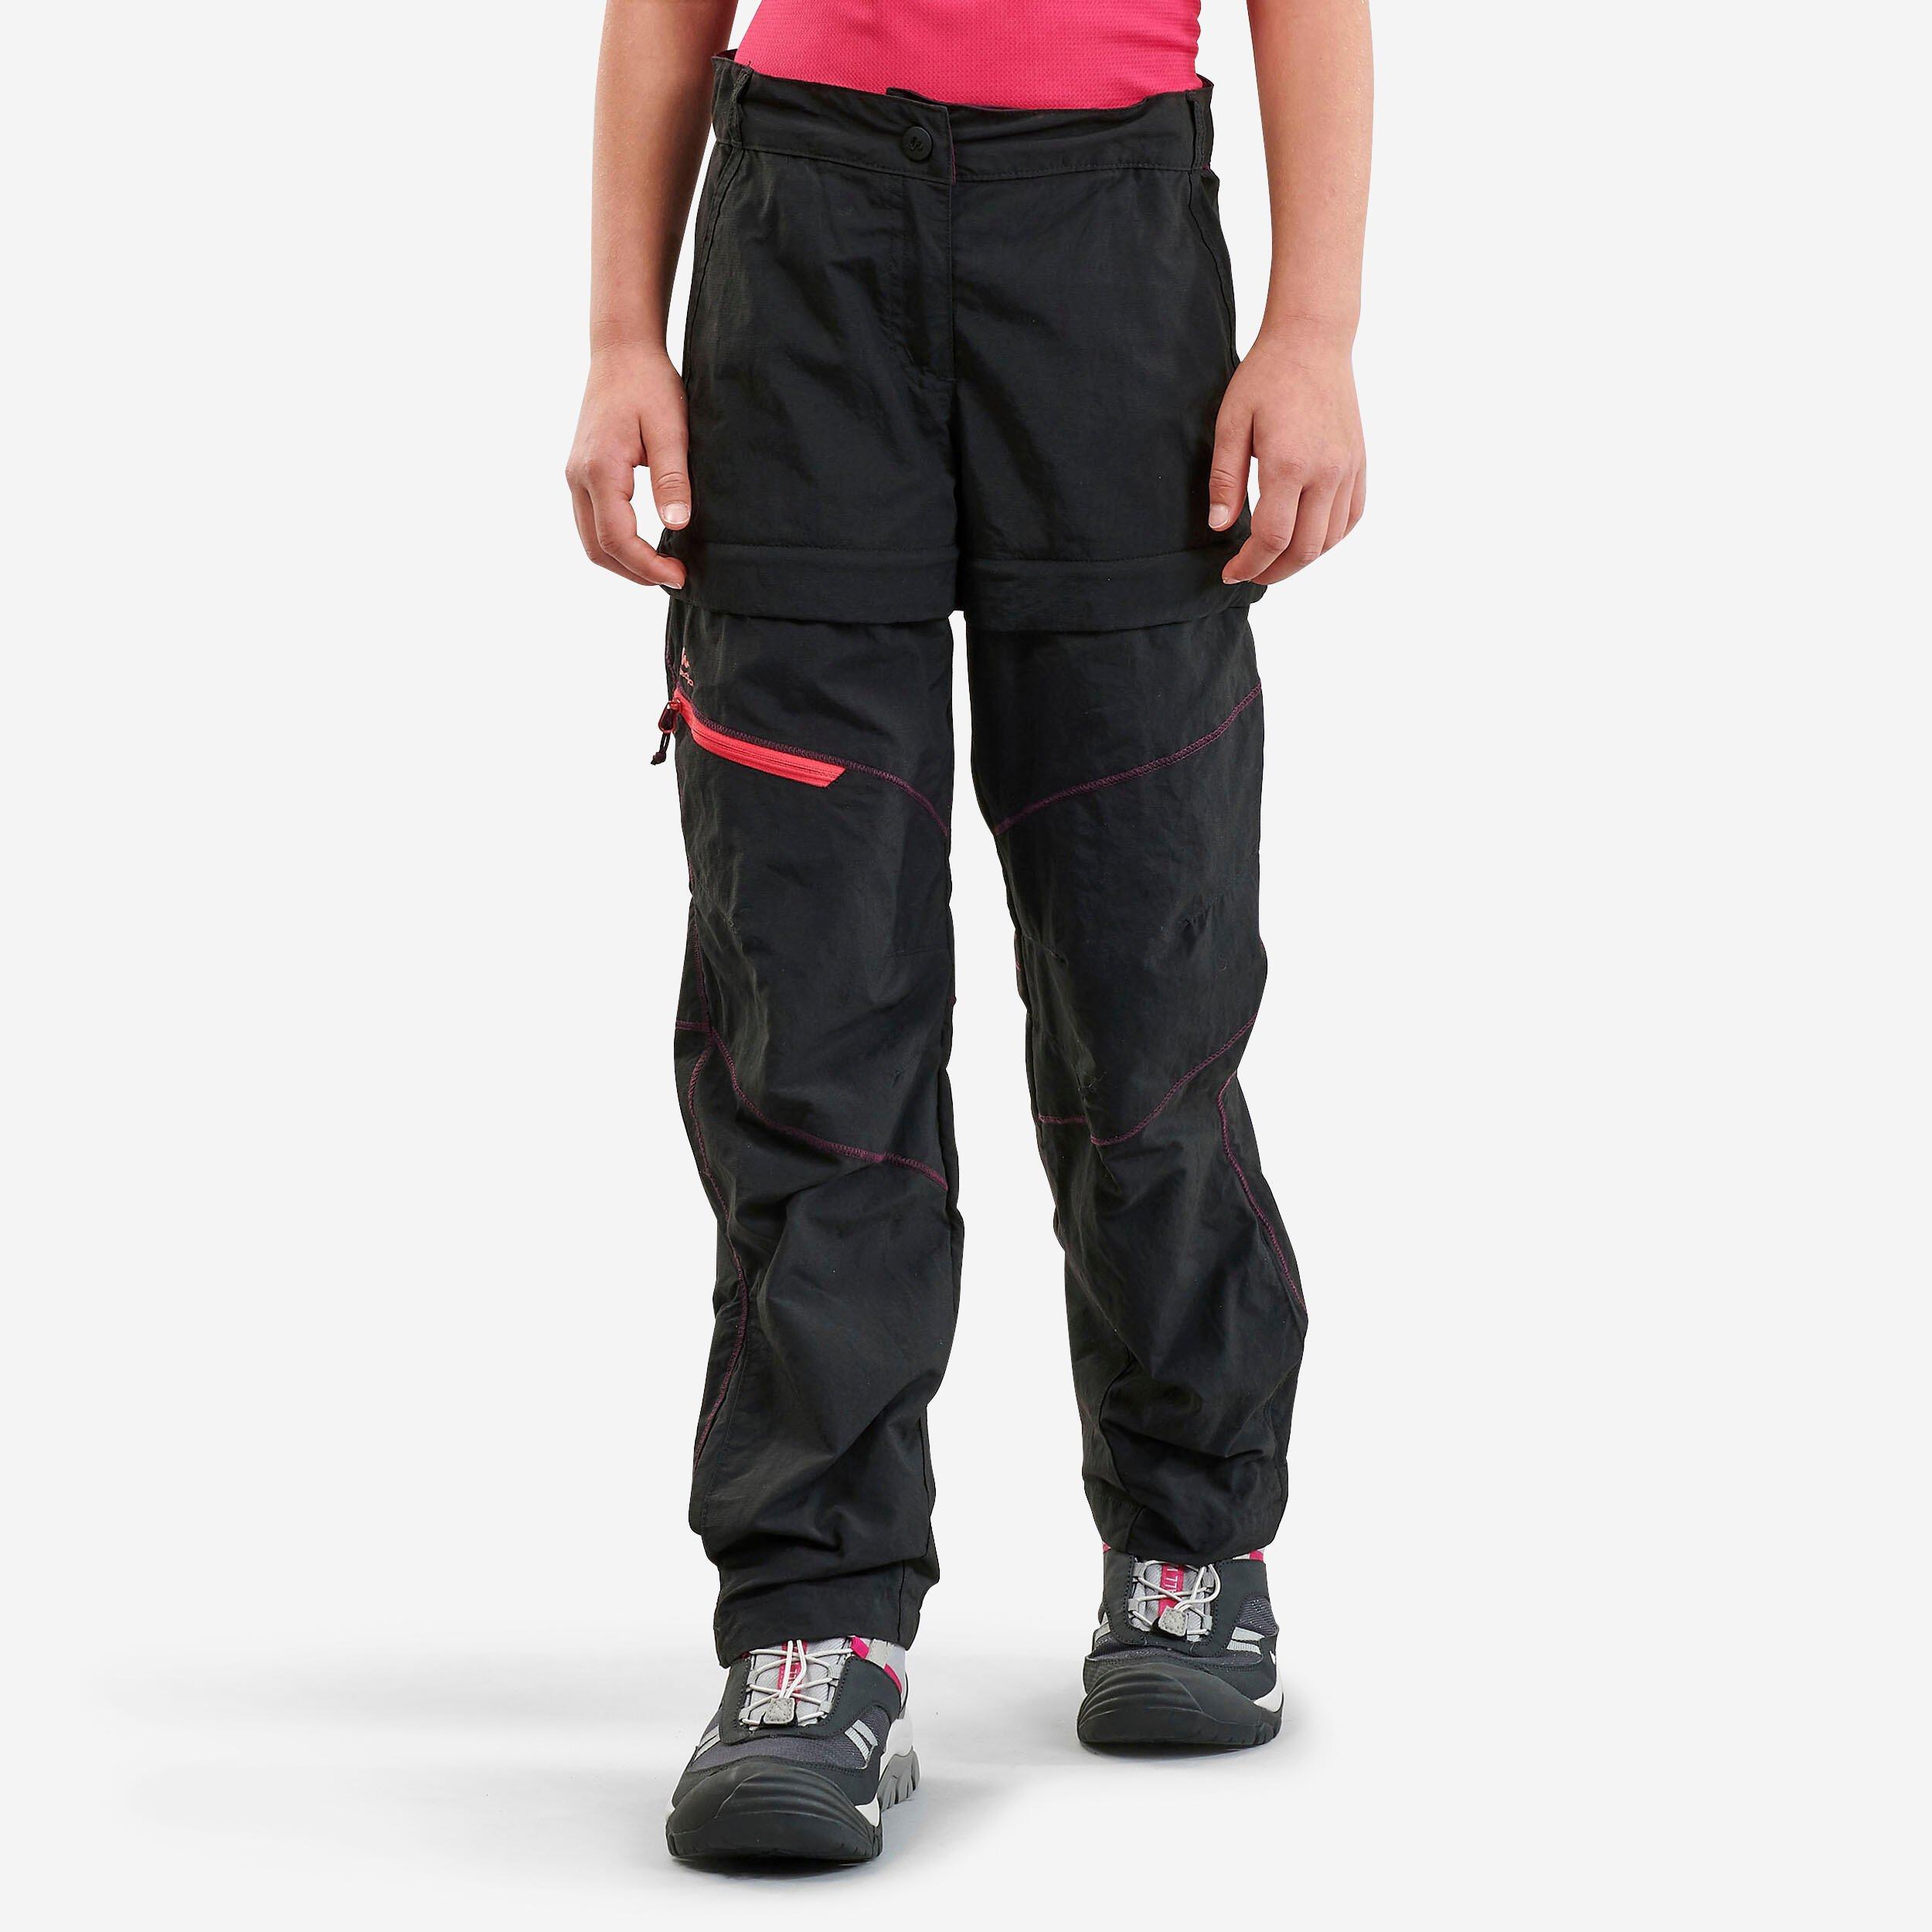 MENS HIKING WARM Water Repellent Stretch Trousers Pants Sh500 X-Warm Quechua  £51.98 - PicClick UK